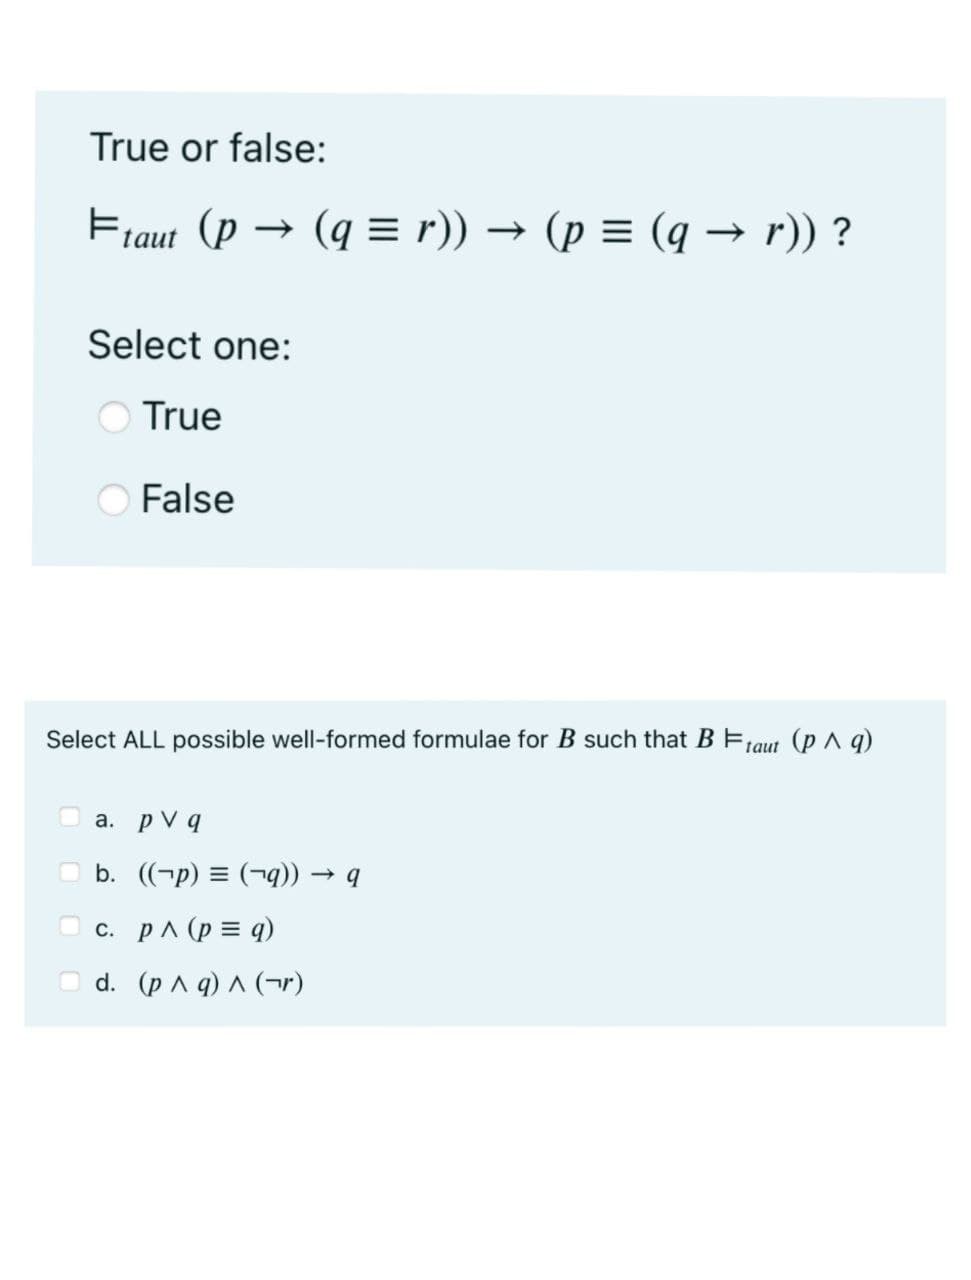 True or false:
Ftaut (p → (q=r)) → (p = (q → r)) ?
Select one:
True
False
Select ALL possible well-formed formulae for B such that B Ftaut (p ^ q)
a. pv q
b. ((-p) = (q)) → q
c. p^ (p = q)
d. (p ^ q) ^ (r)